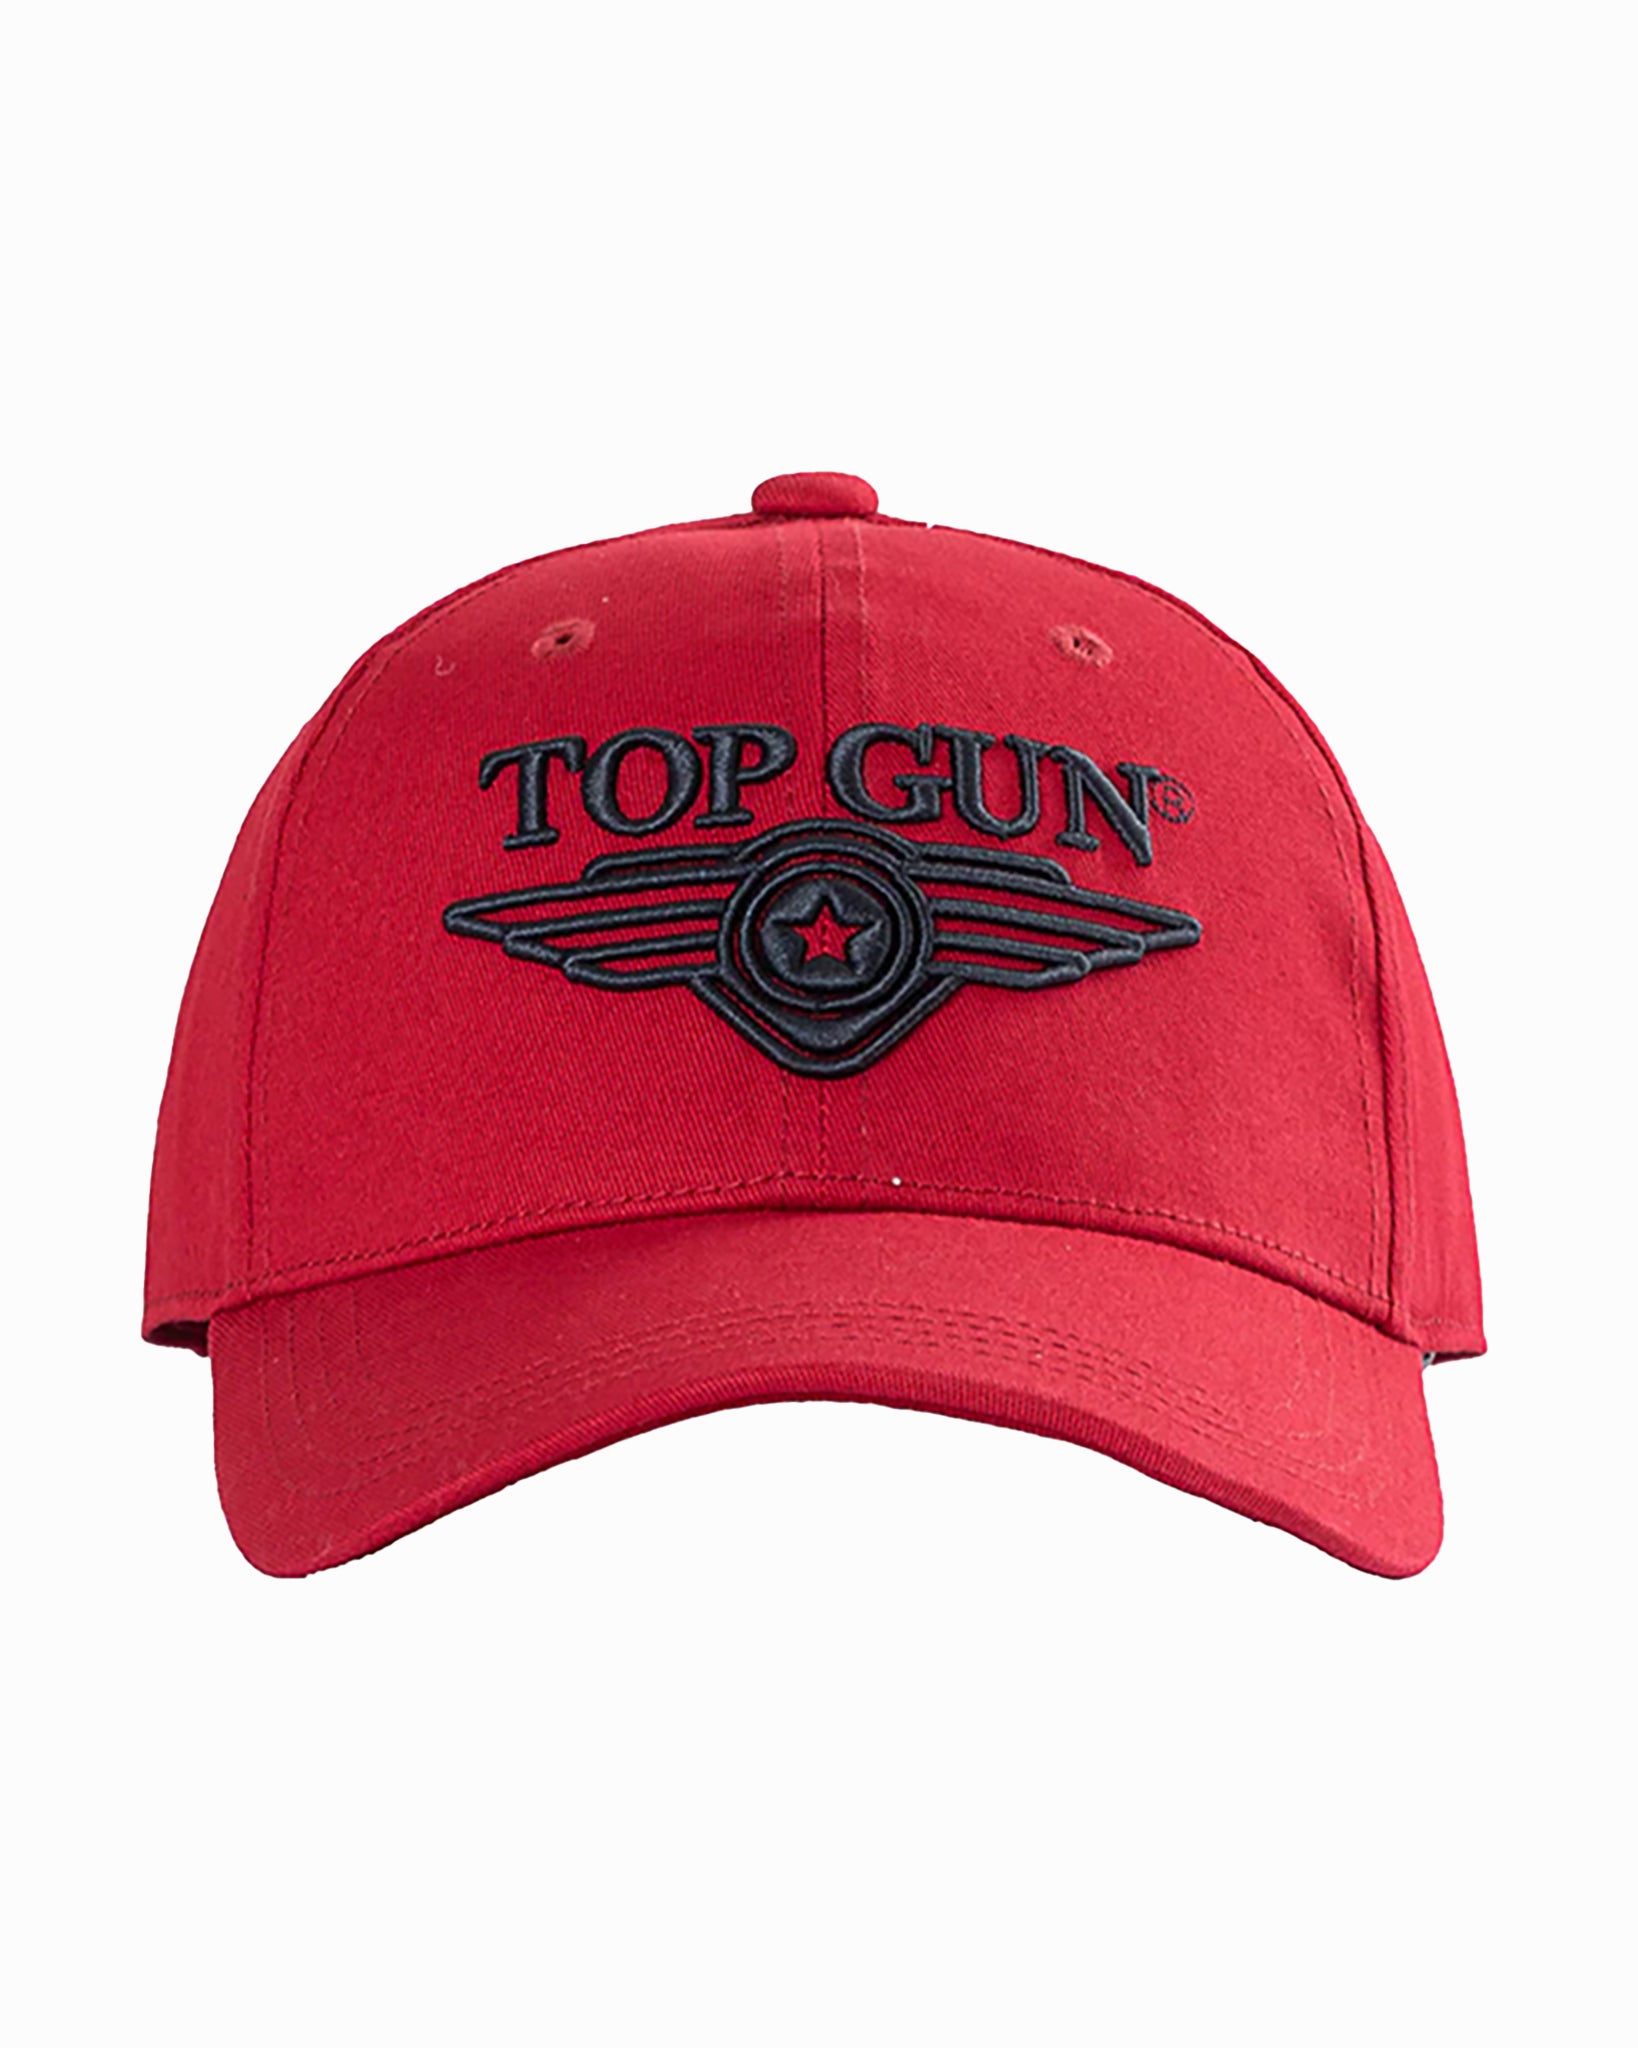 [Neuer Originalartikel] Top Gun: Maverick Caps | and – Gun Top Store Cap, Official More | Store Hat, Beanie, Trucker